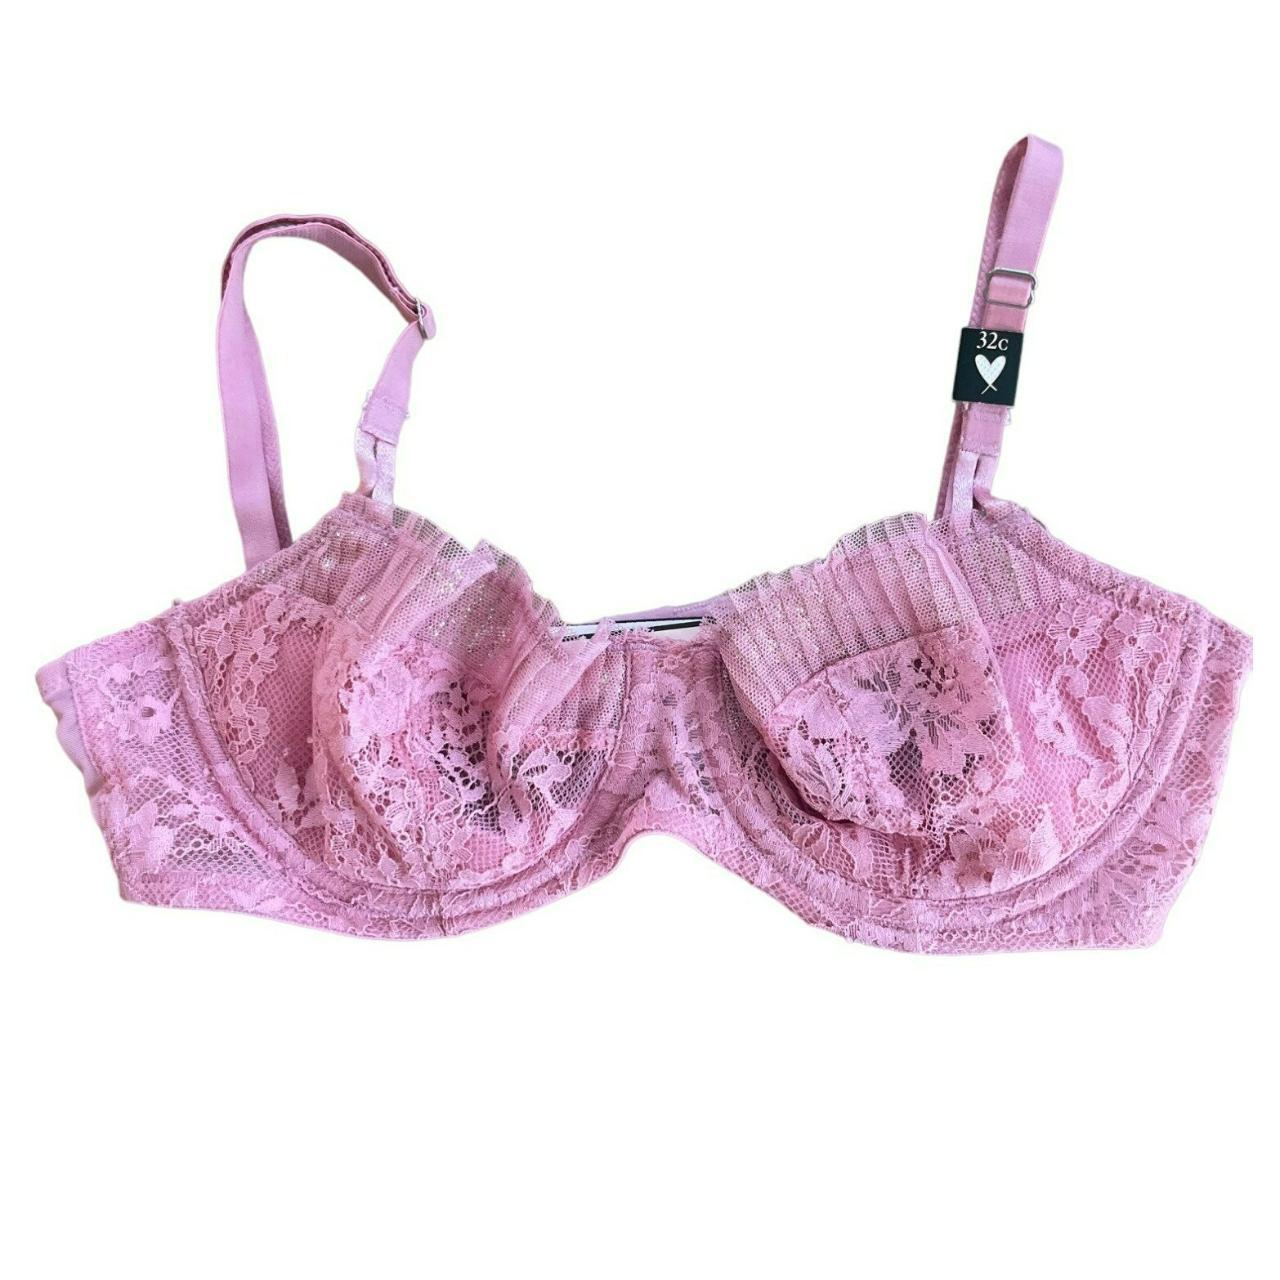 PINK Victoria's Secret Lace Push Up Underwire Padded Bra 32C